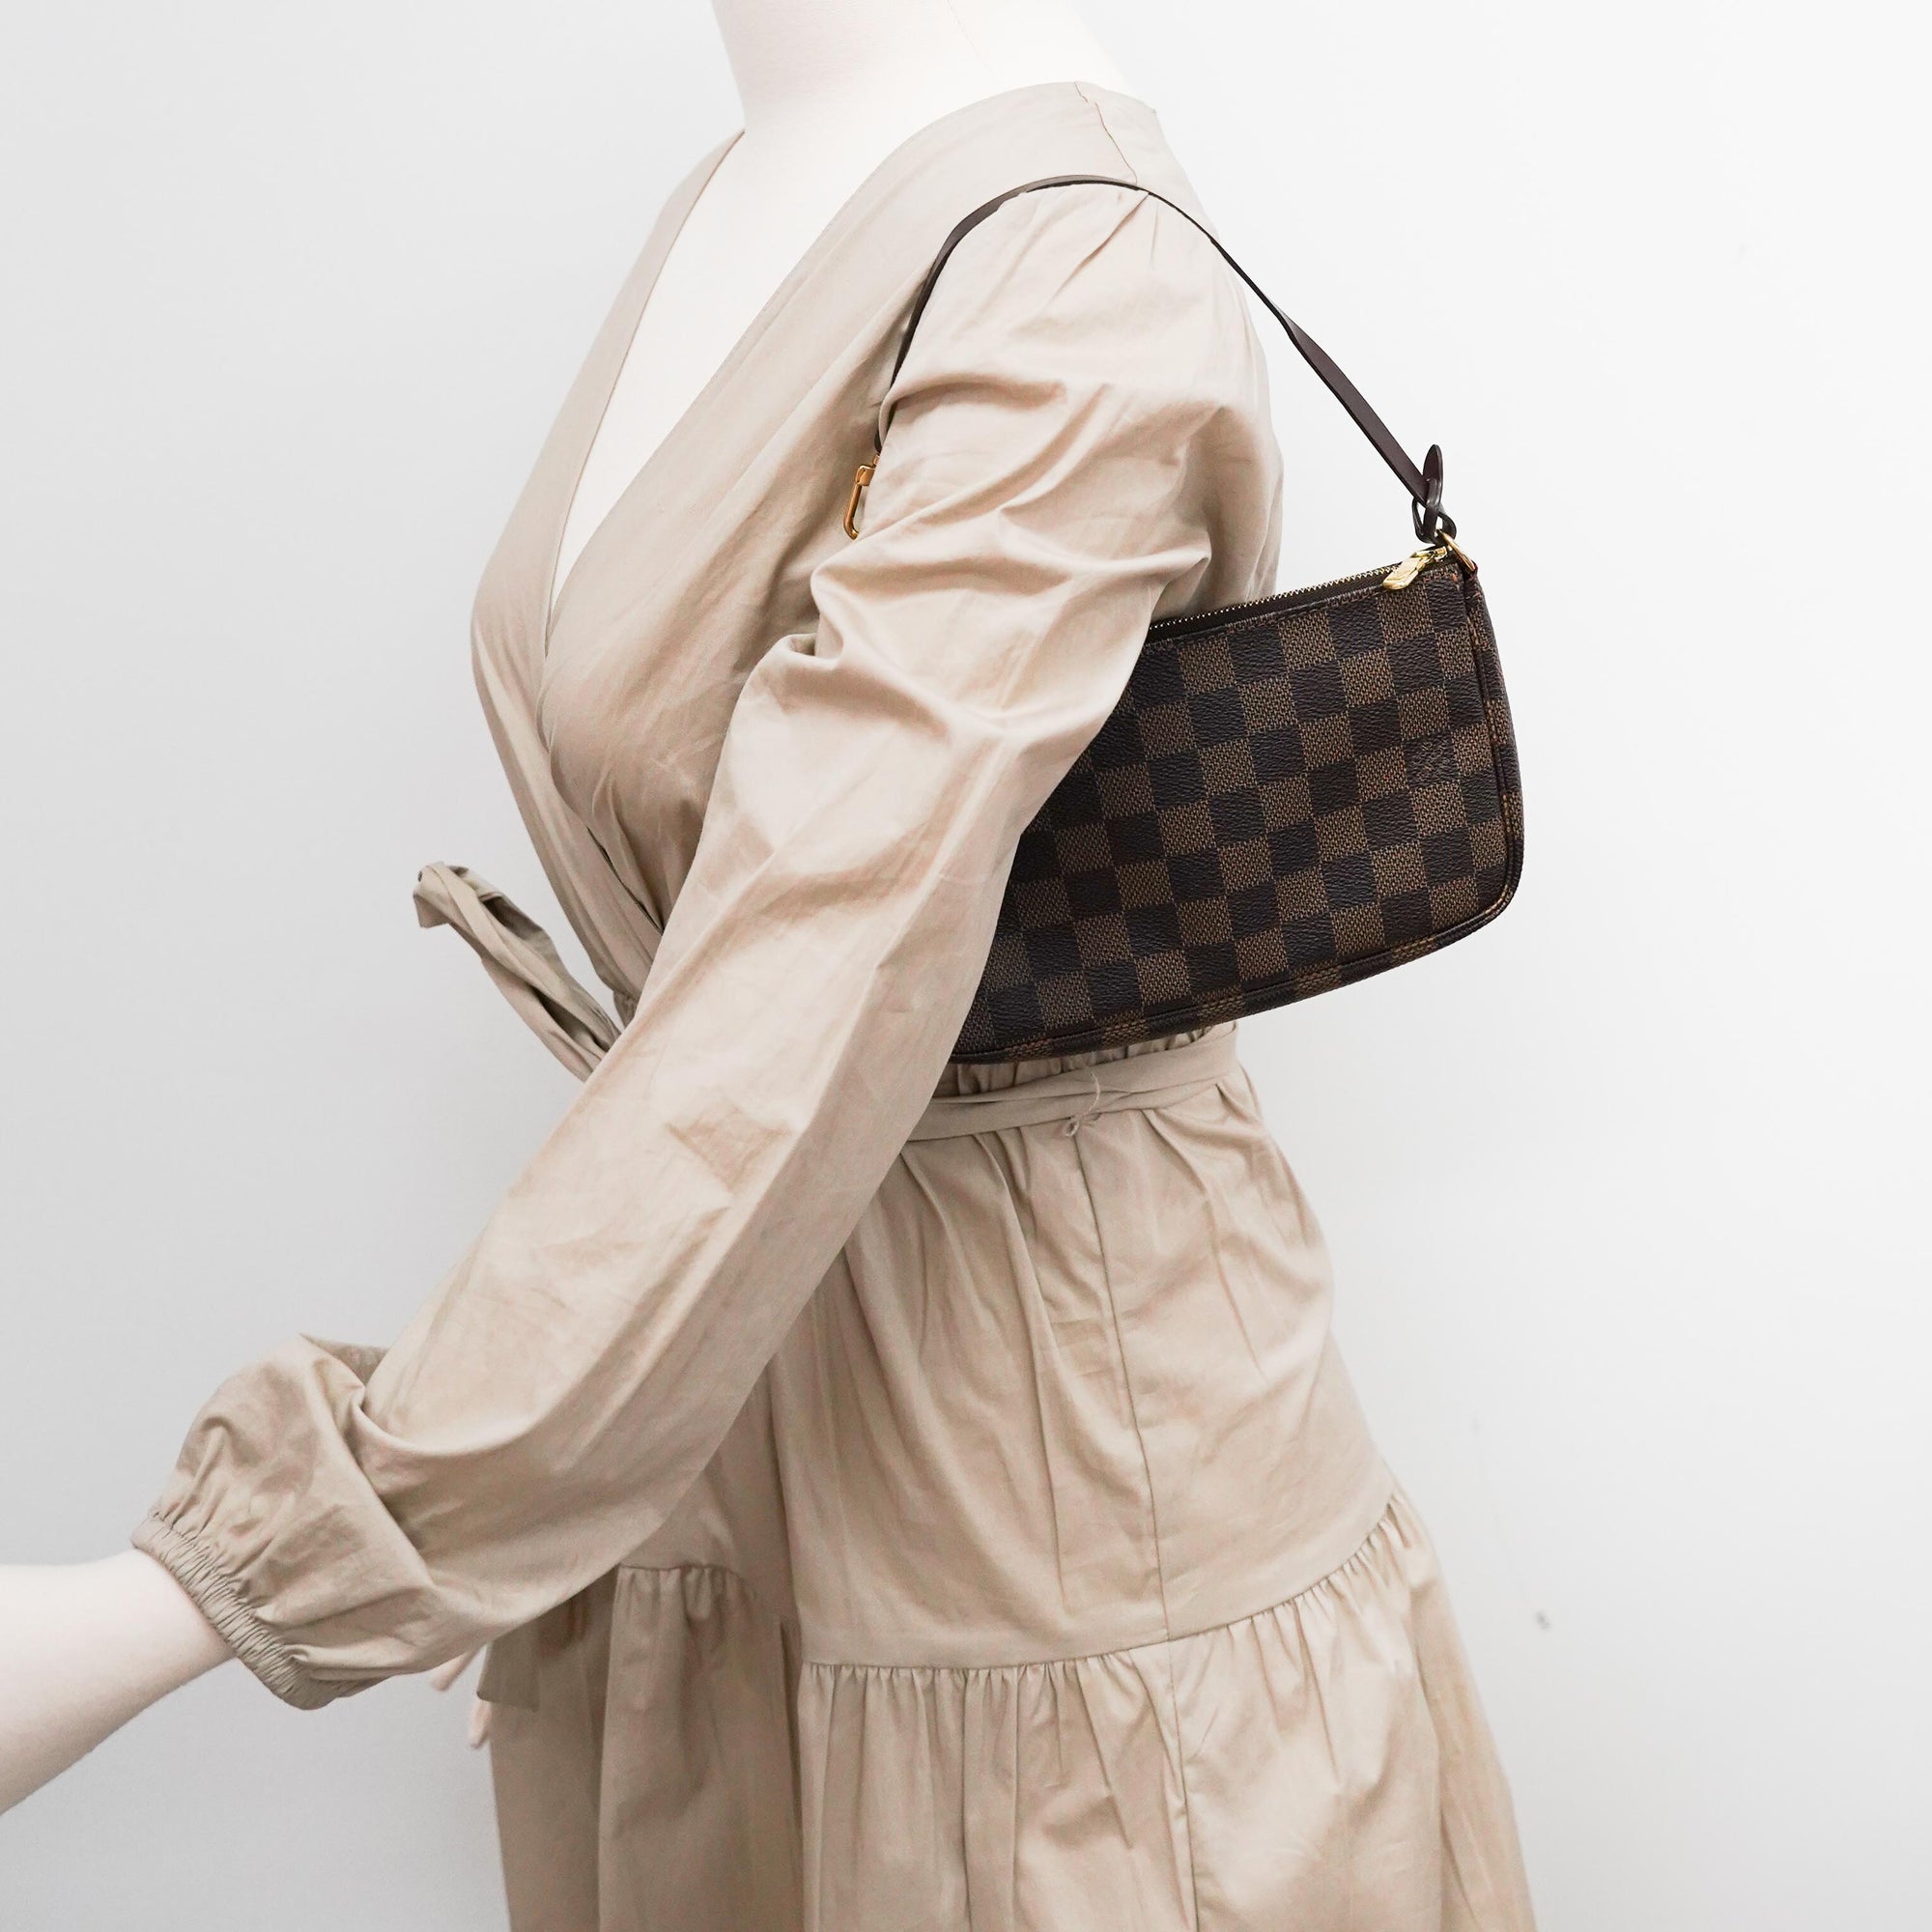 Louis Vuitton Pochette Damier Ebene - Designer WishBags